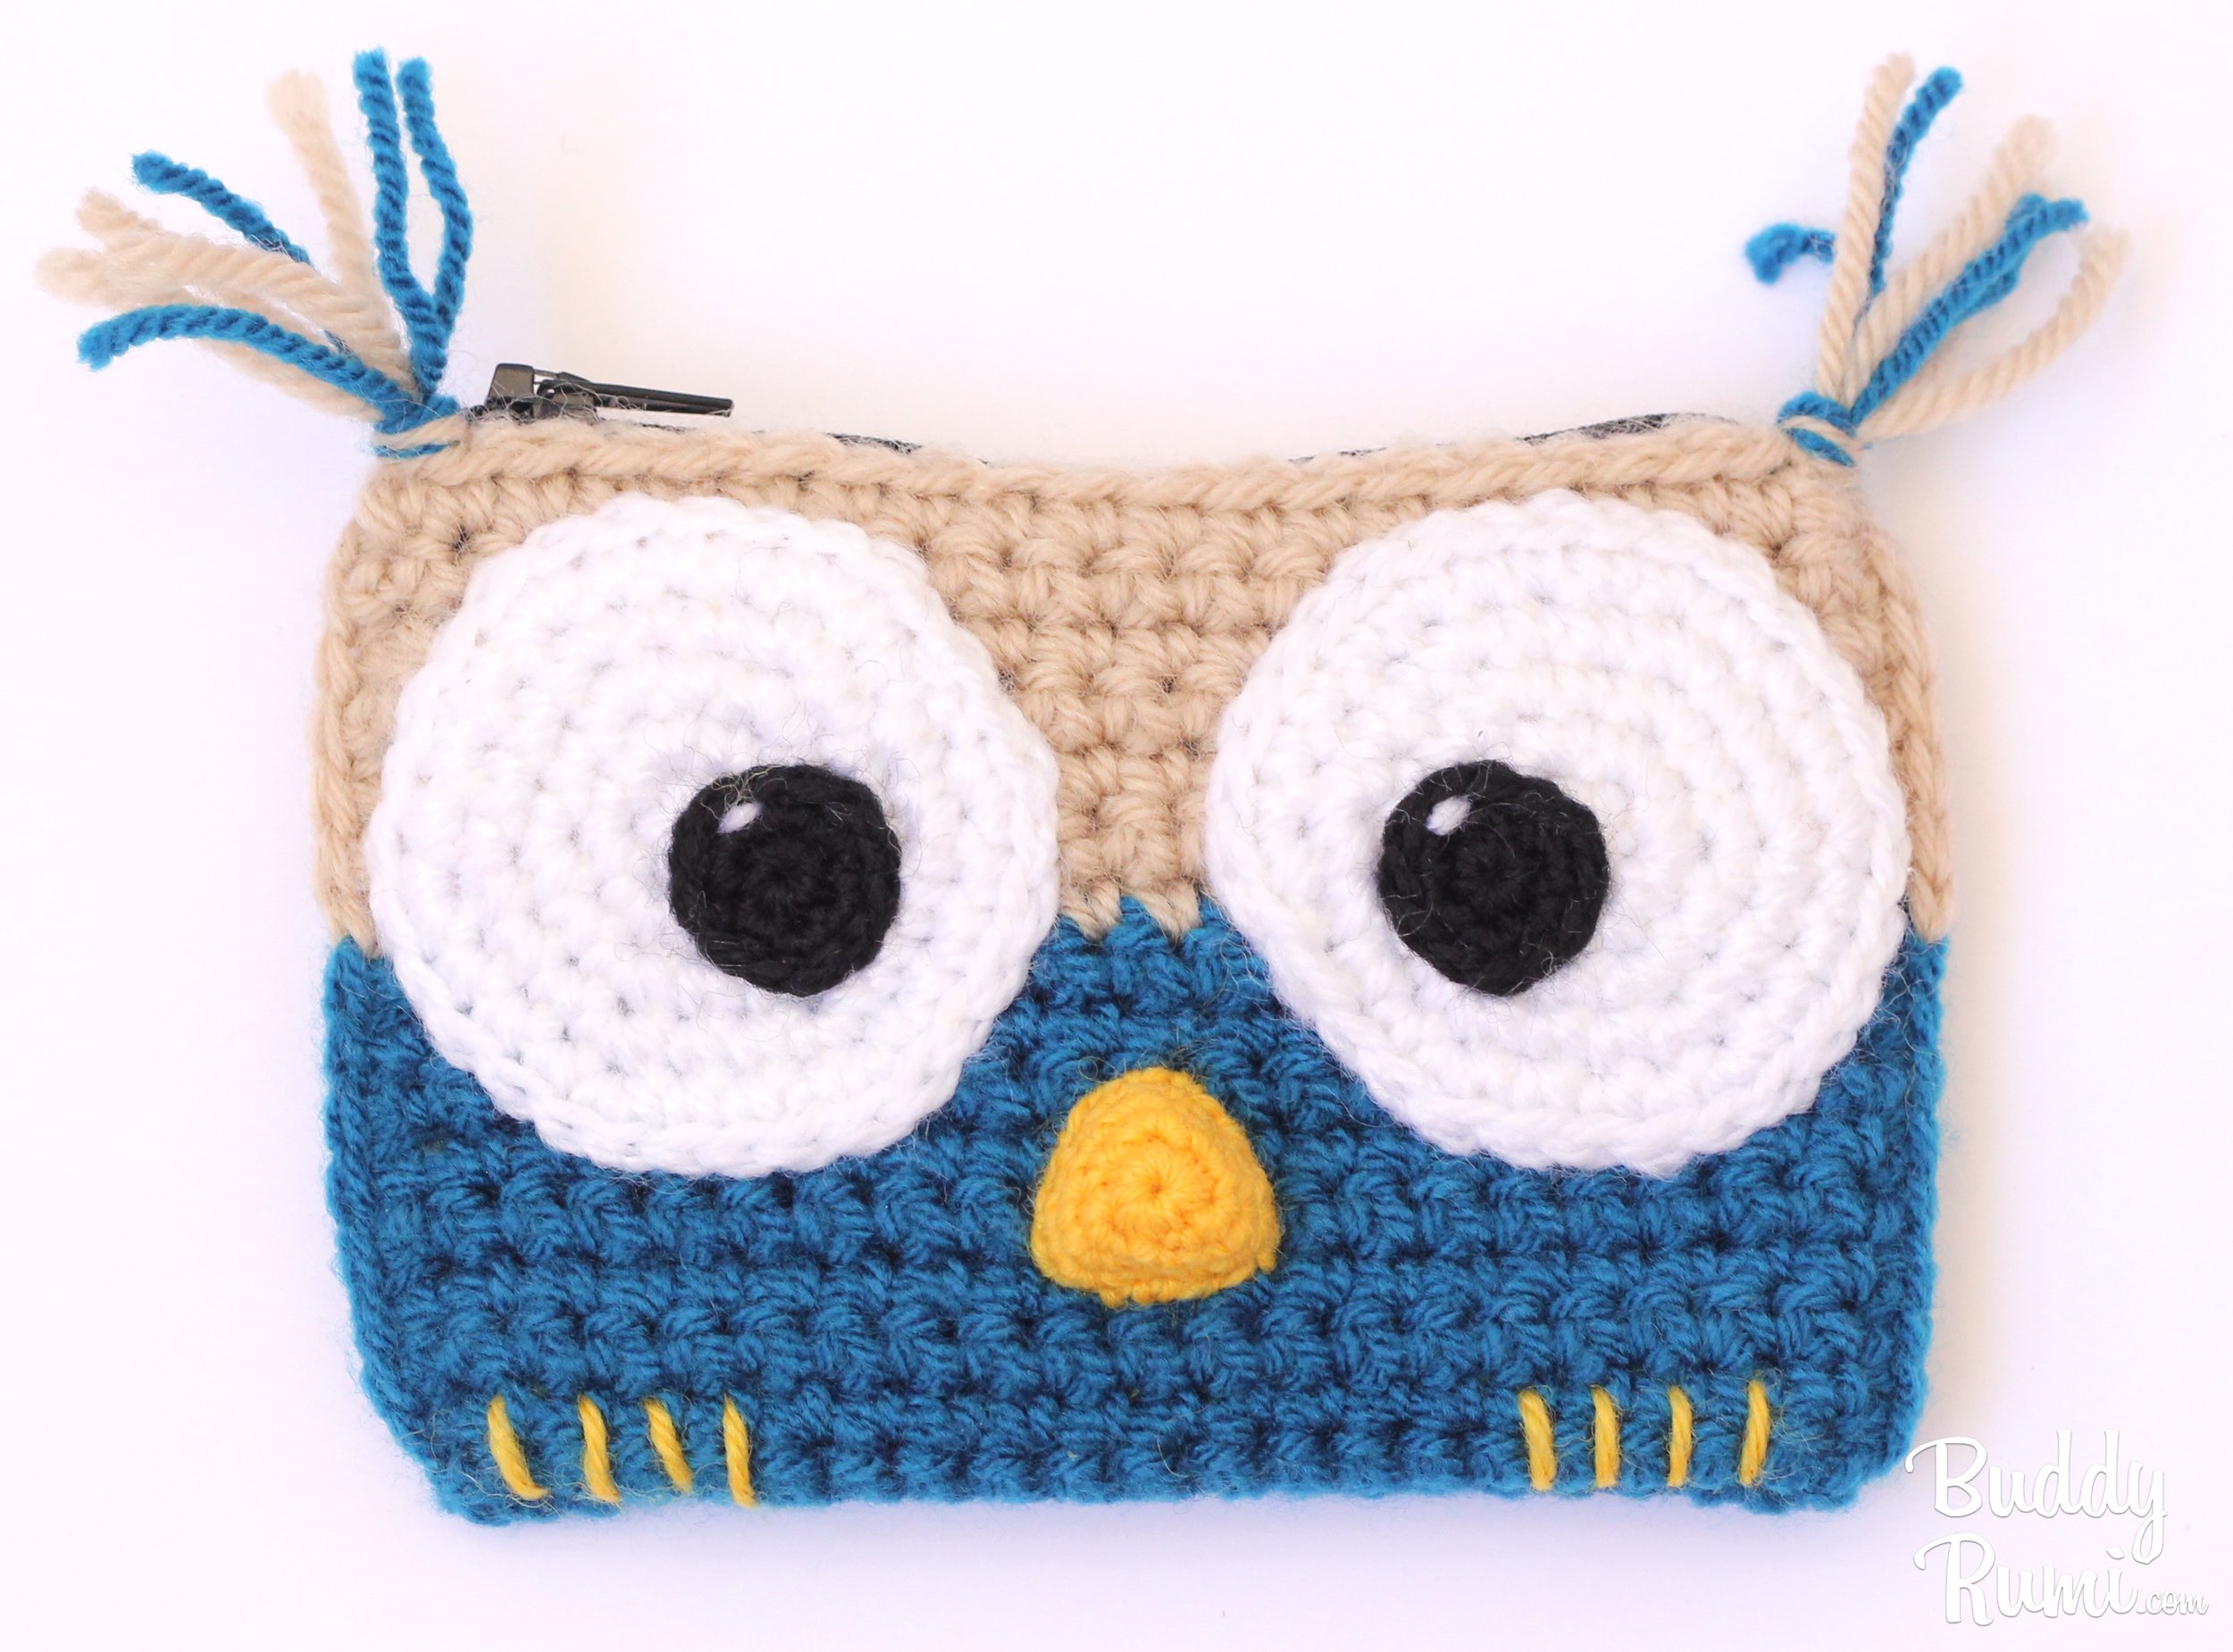 How to Place Safety Eyes — BuddyRumi Amigurumi Crochet Patterns